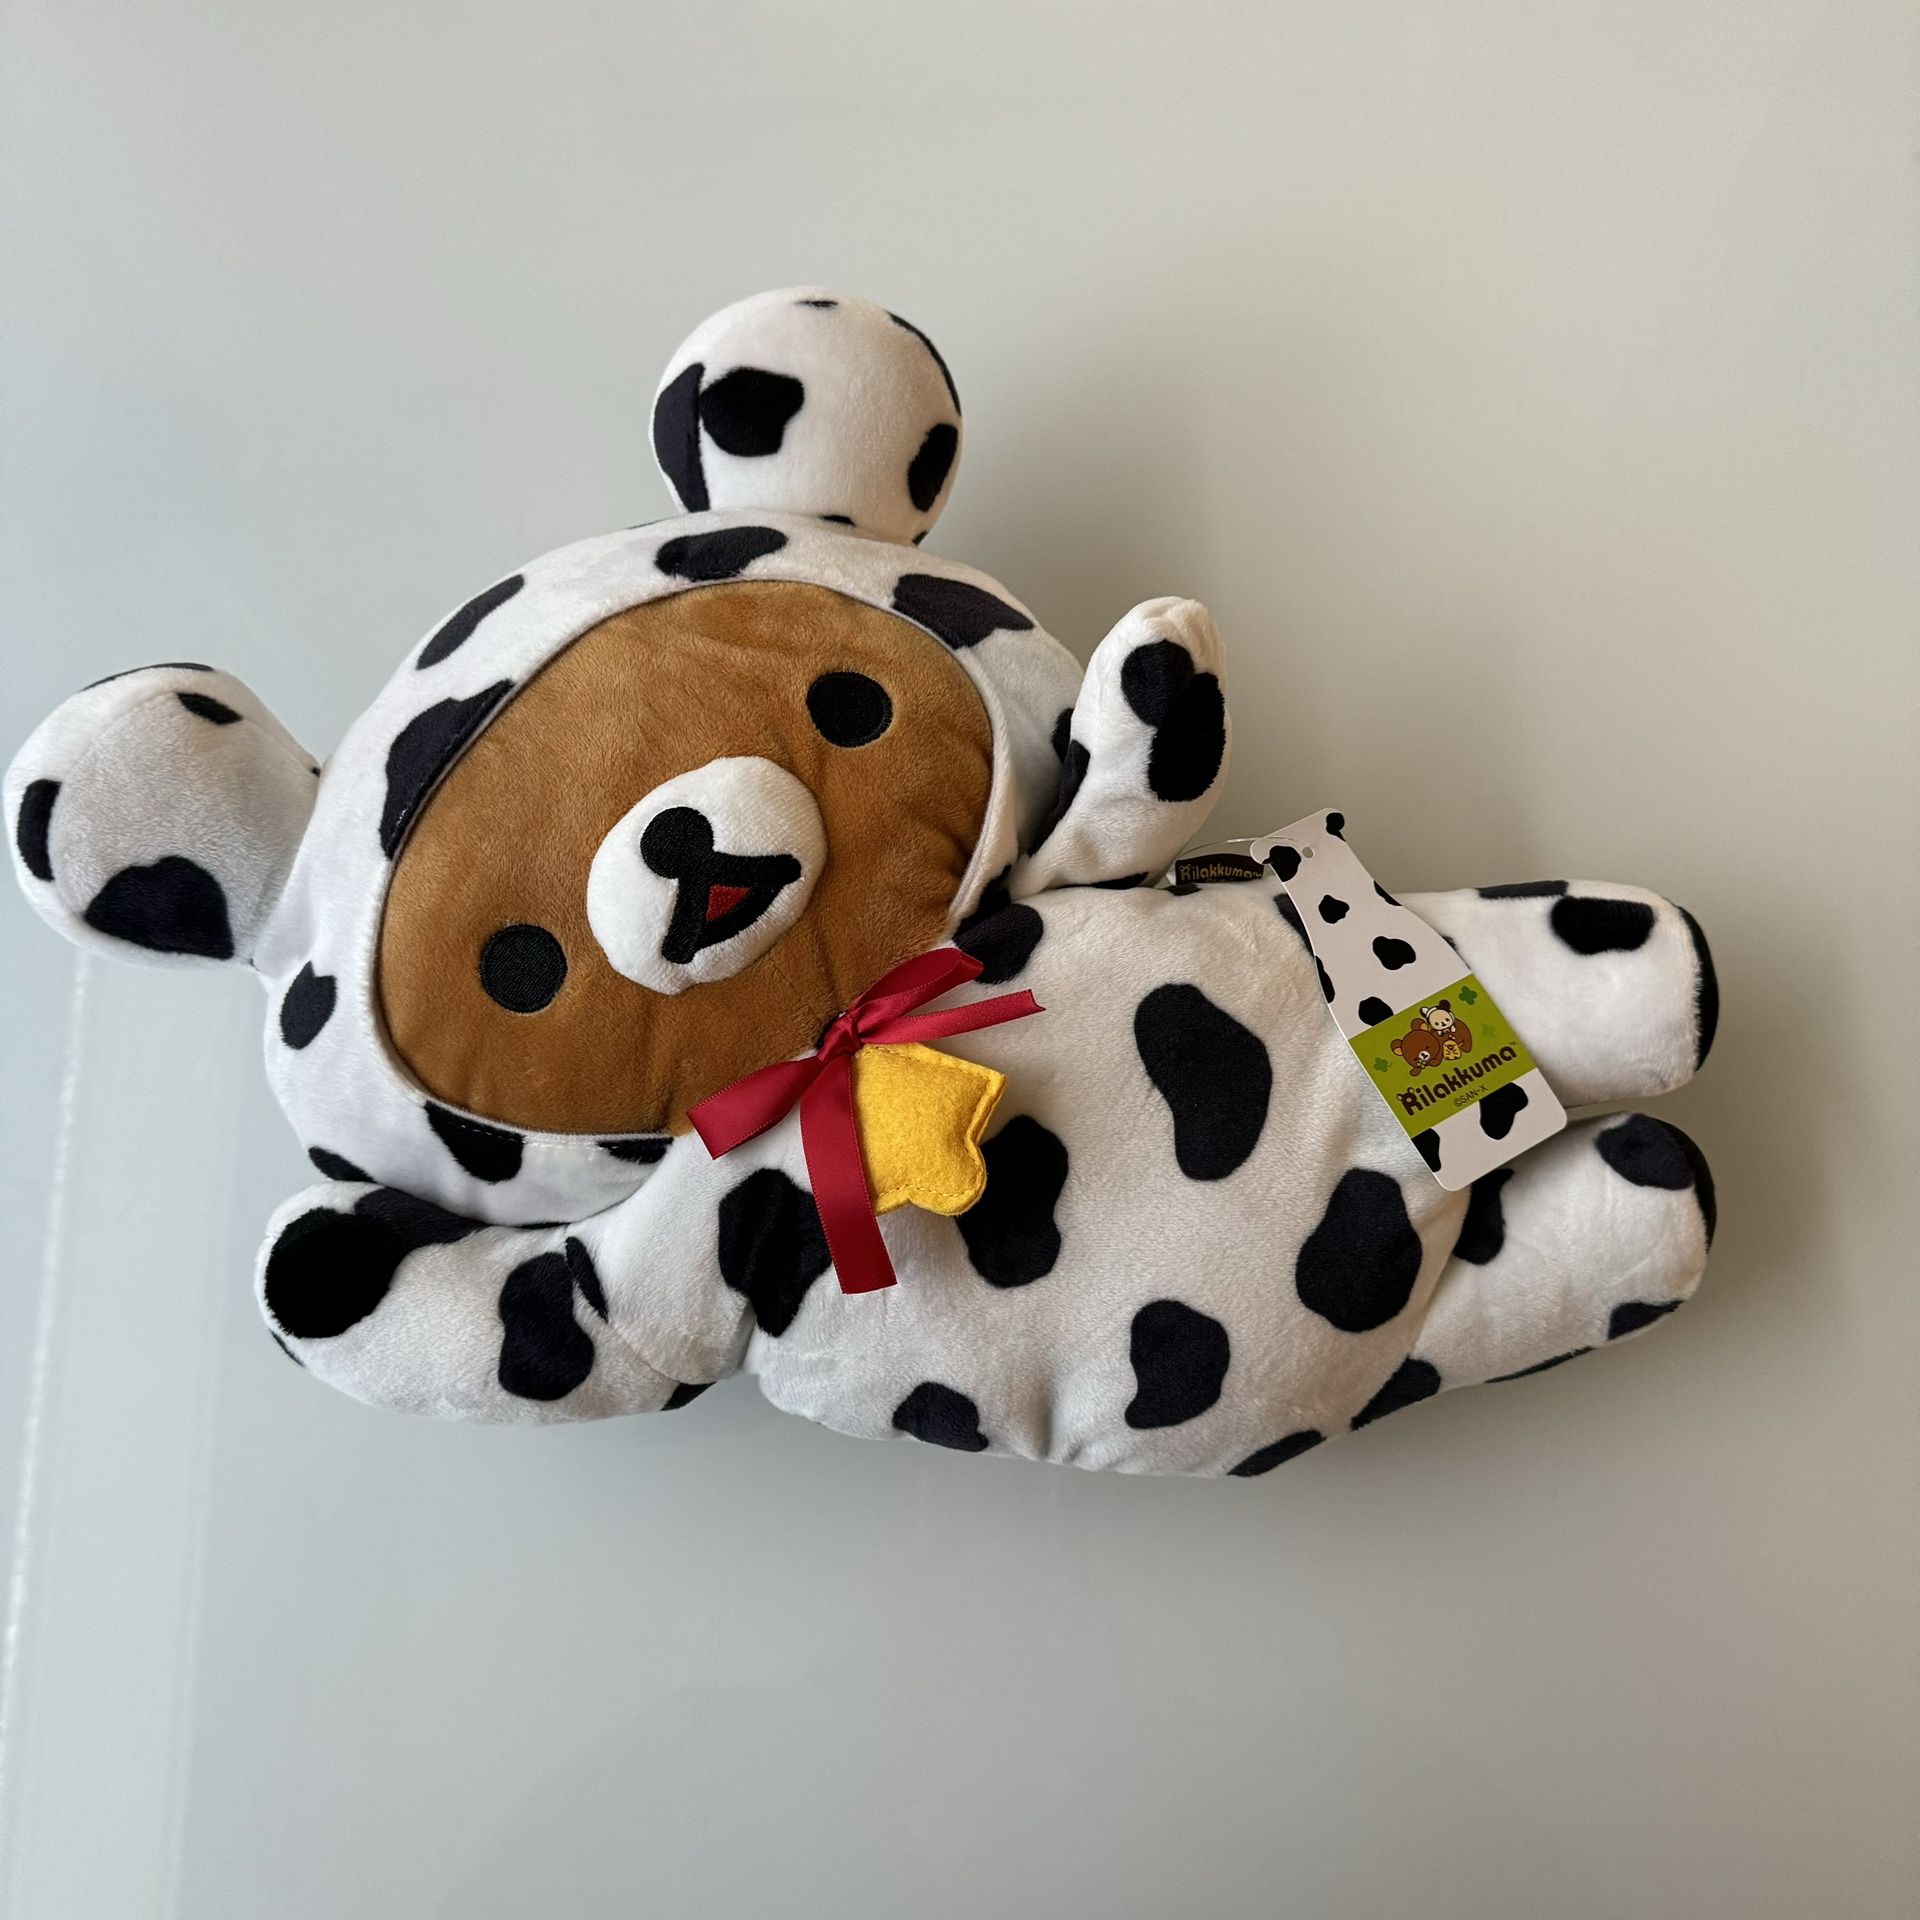 New - 18” Rilakkuma Limited Edition Lay down Stuffed Animal Plush Toy Cow